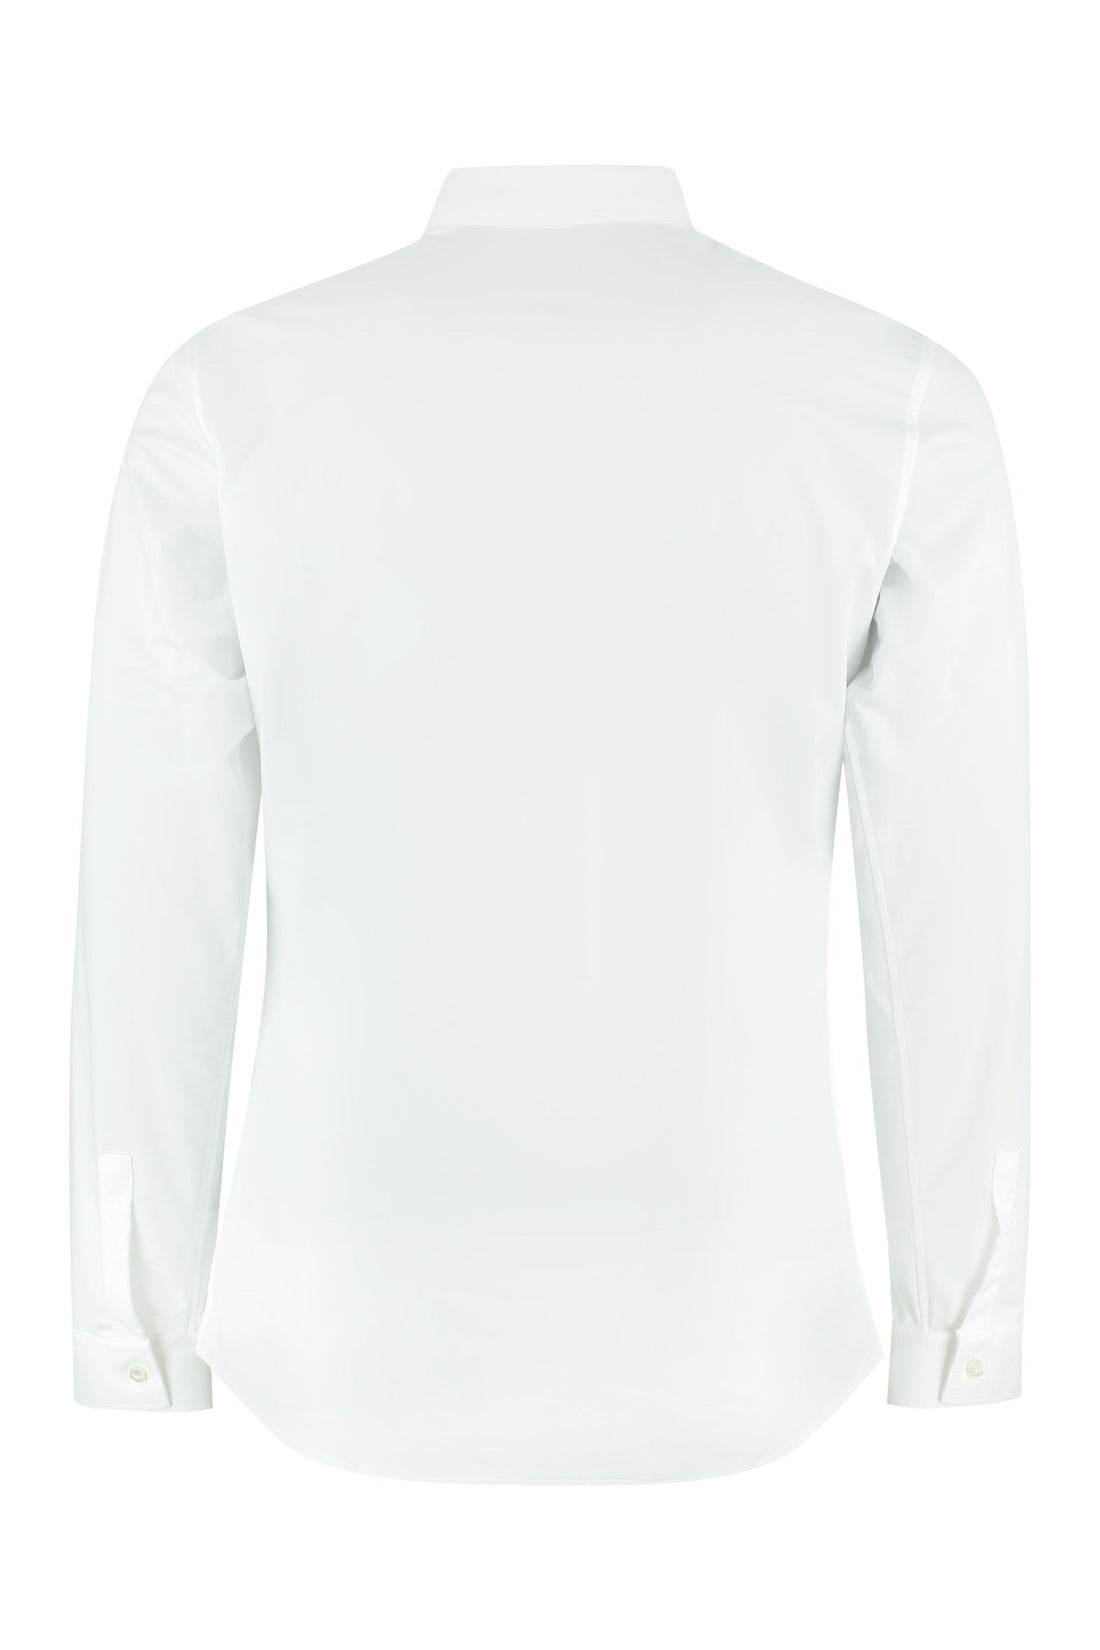 HYDROGEN-OUTLET-SALE-Technical fabric shirt-ARCHIVIST